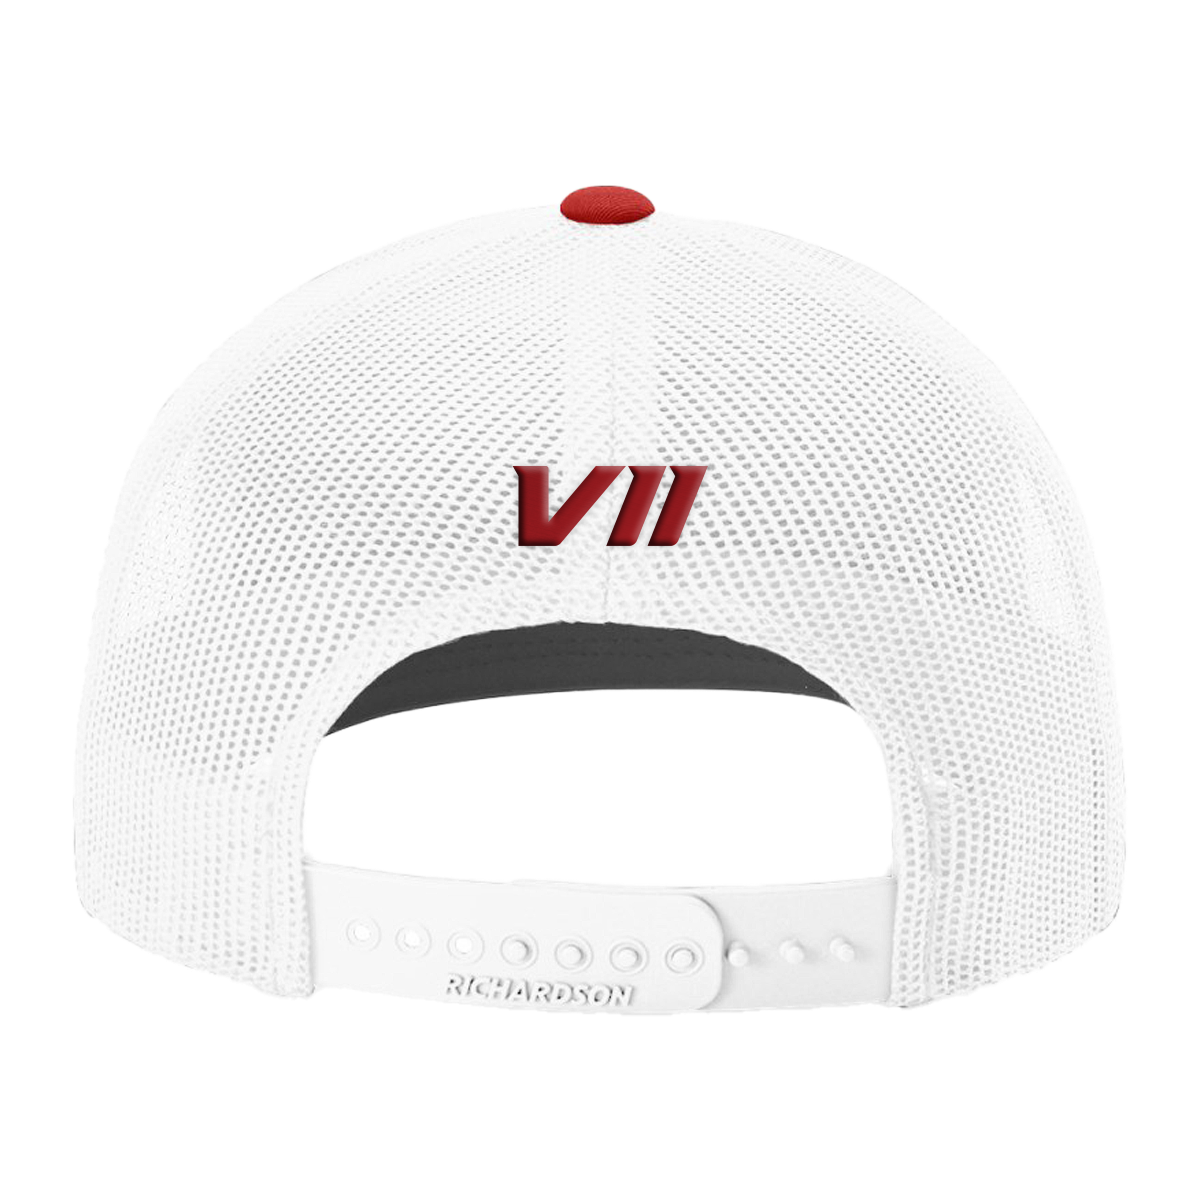 St. Croix Fishing Rods Logo Printed Baseball Cap Black Hat Size S/M & L/XL